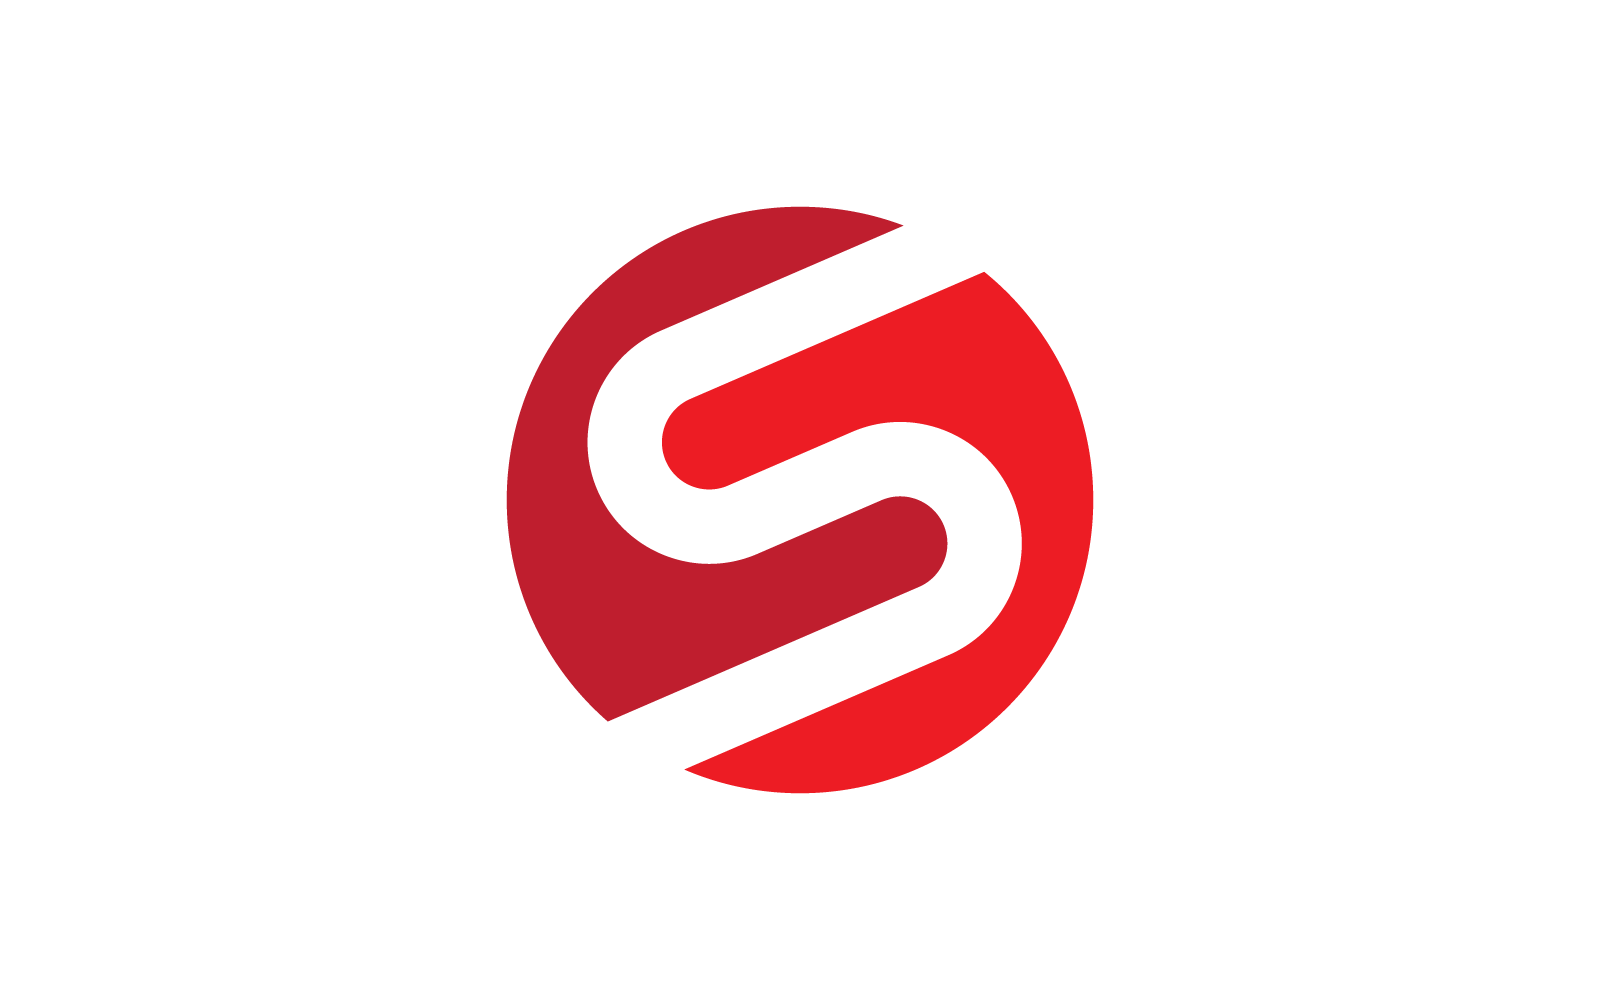 S letter logo illustration icon flat design vector